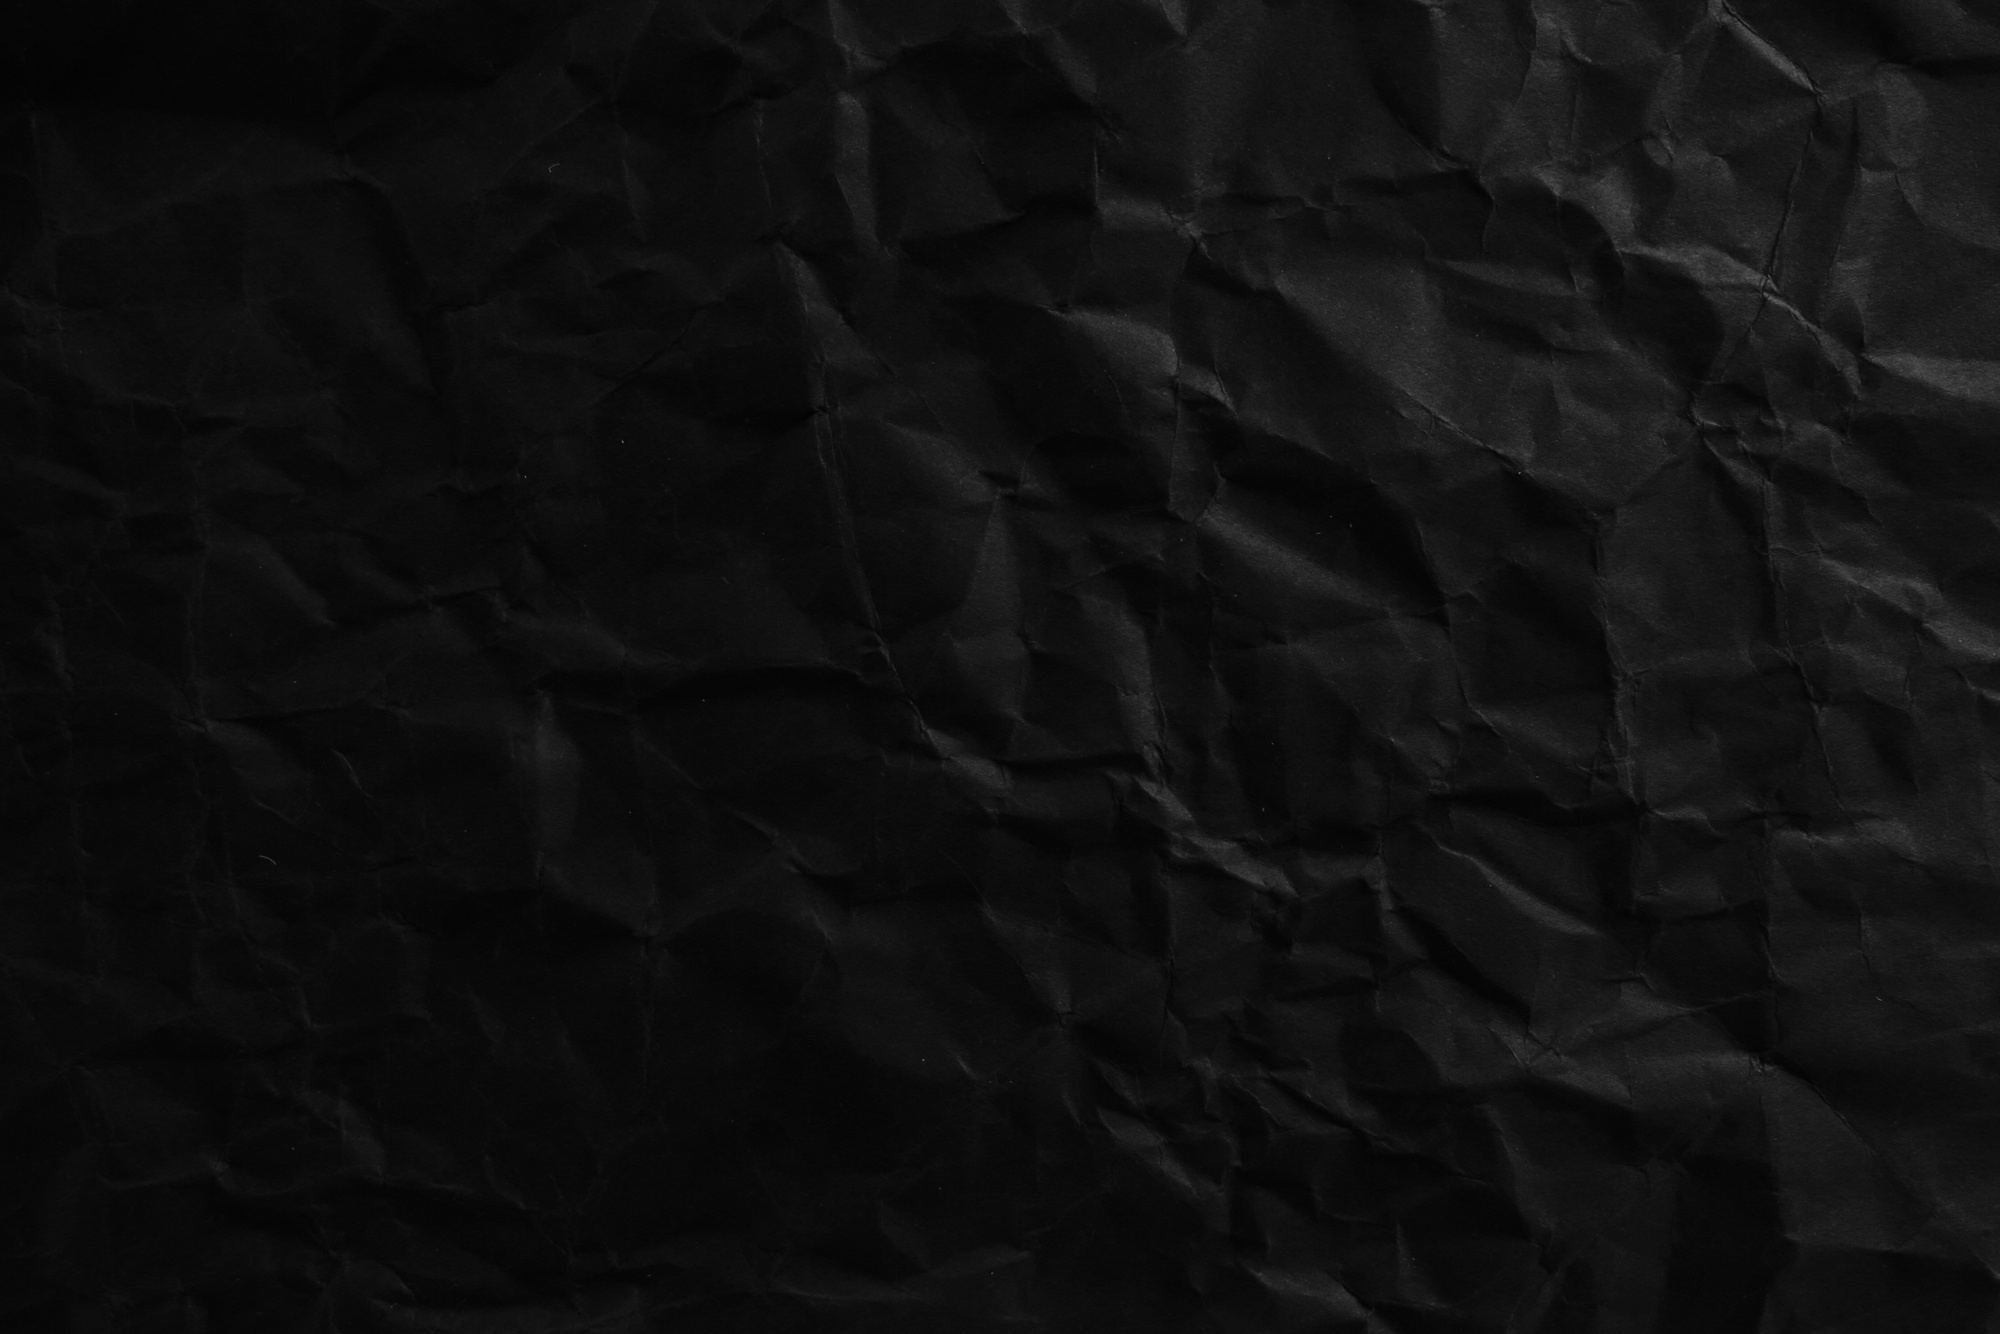 damaged black paper texture